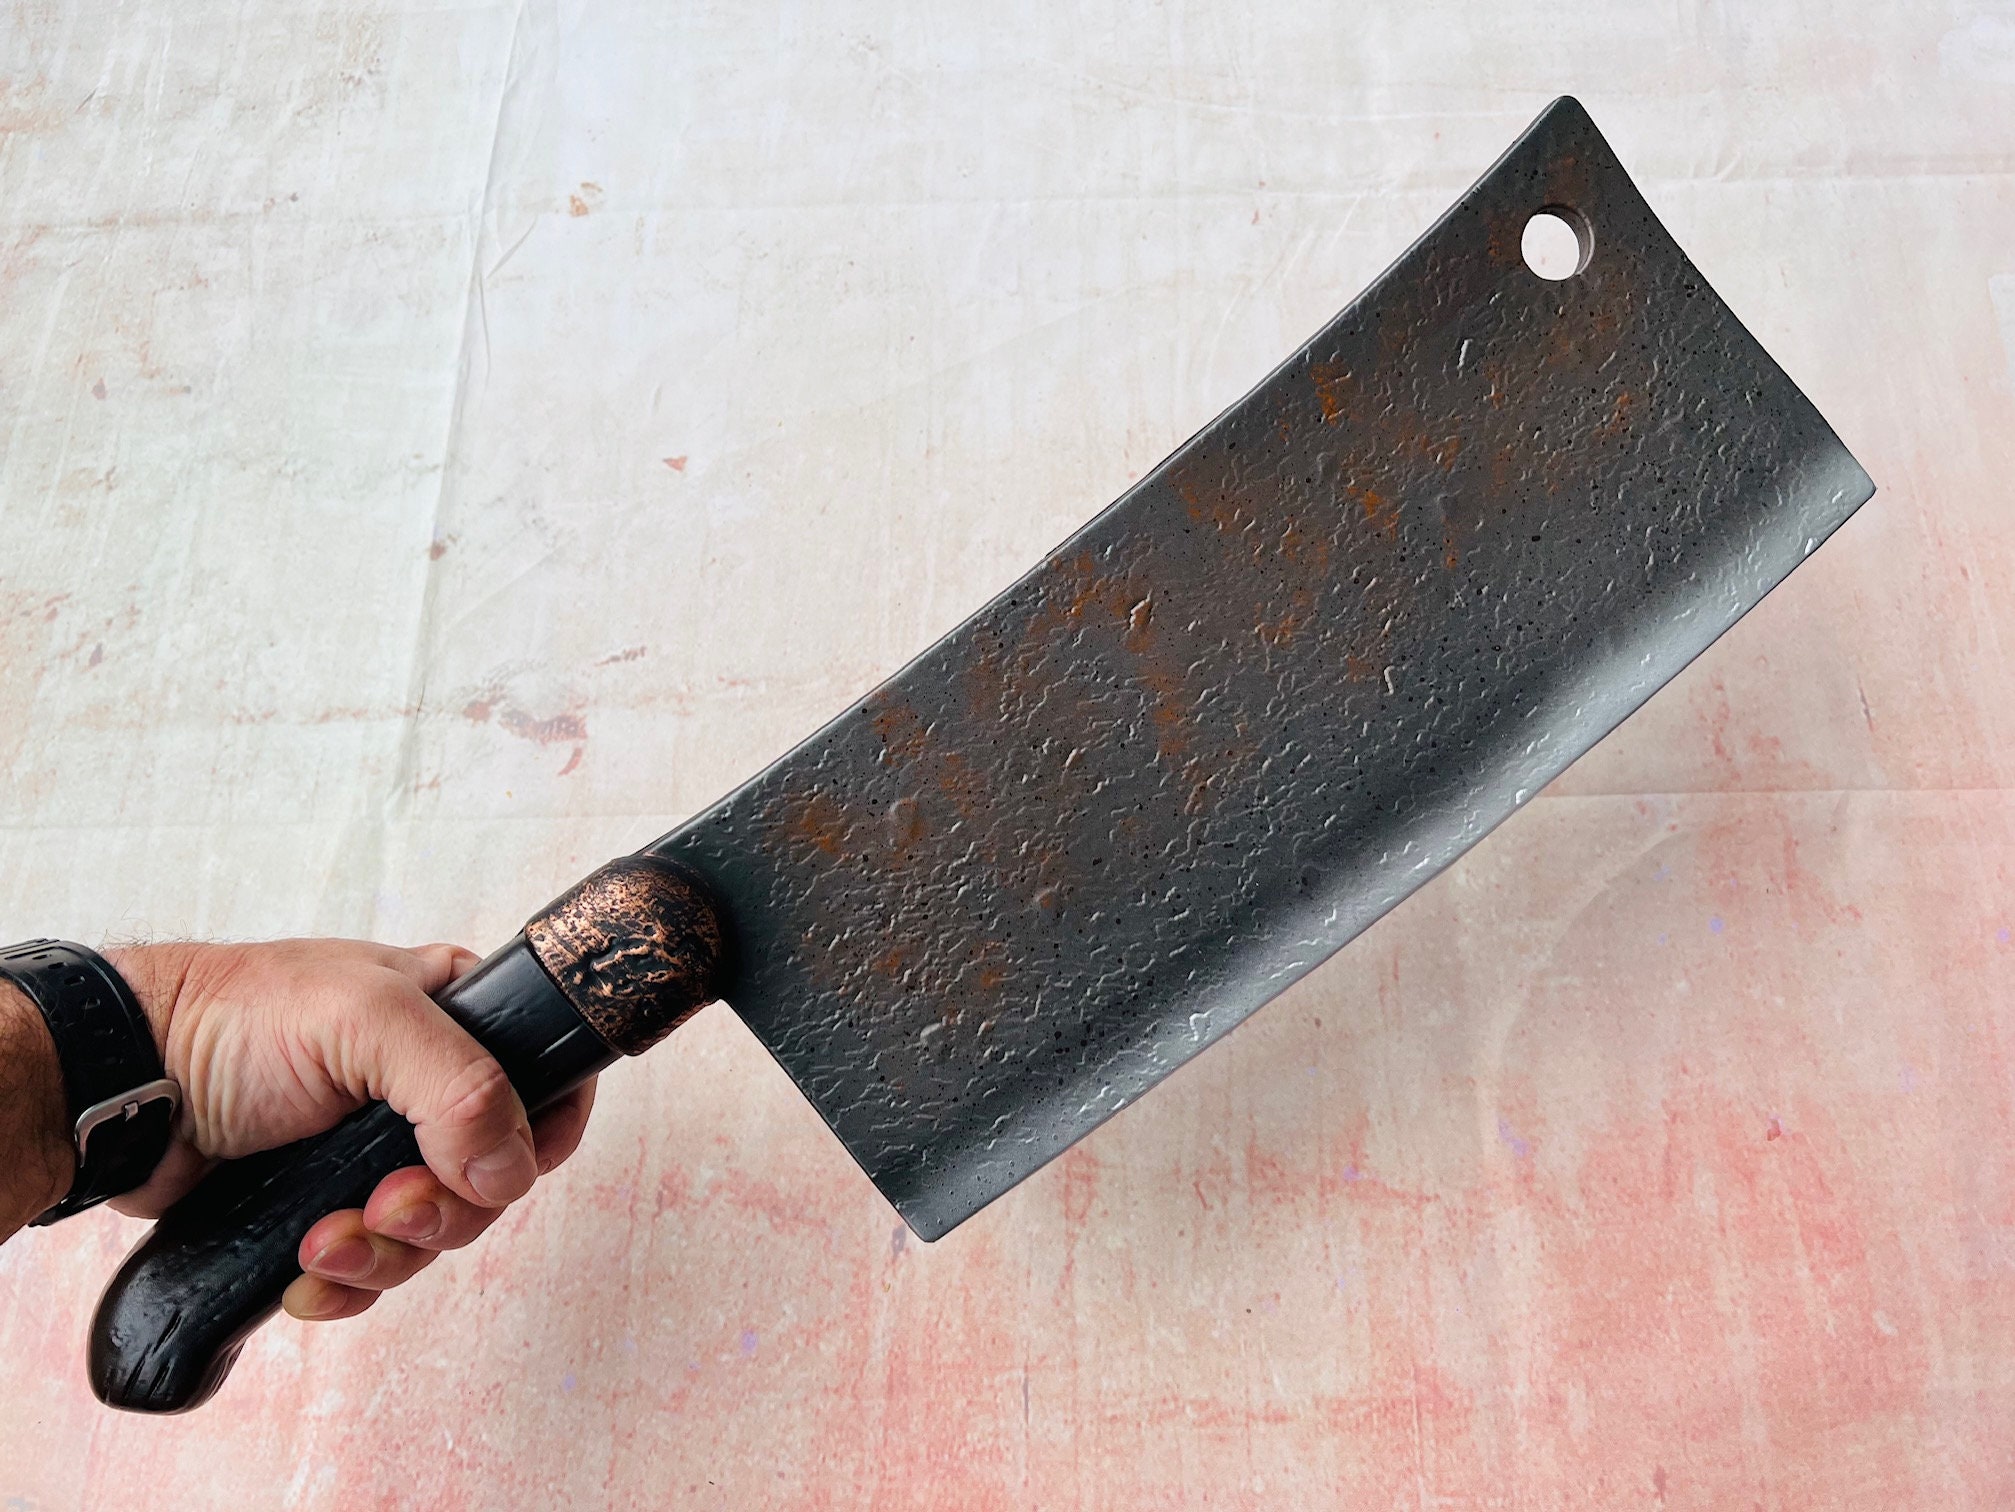  Kole Curved Chopping Knife Kitchen Essentials, Regular